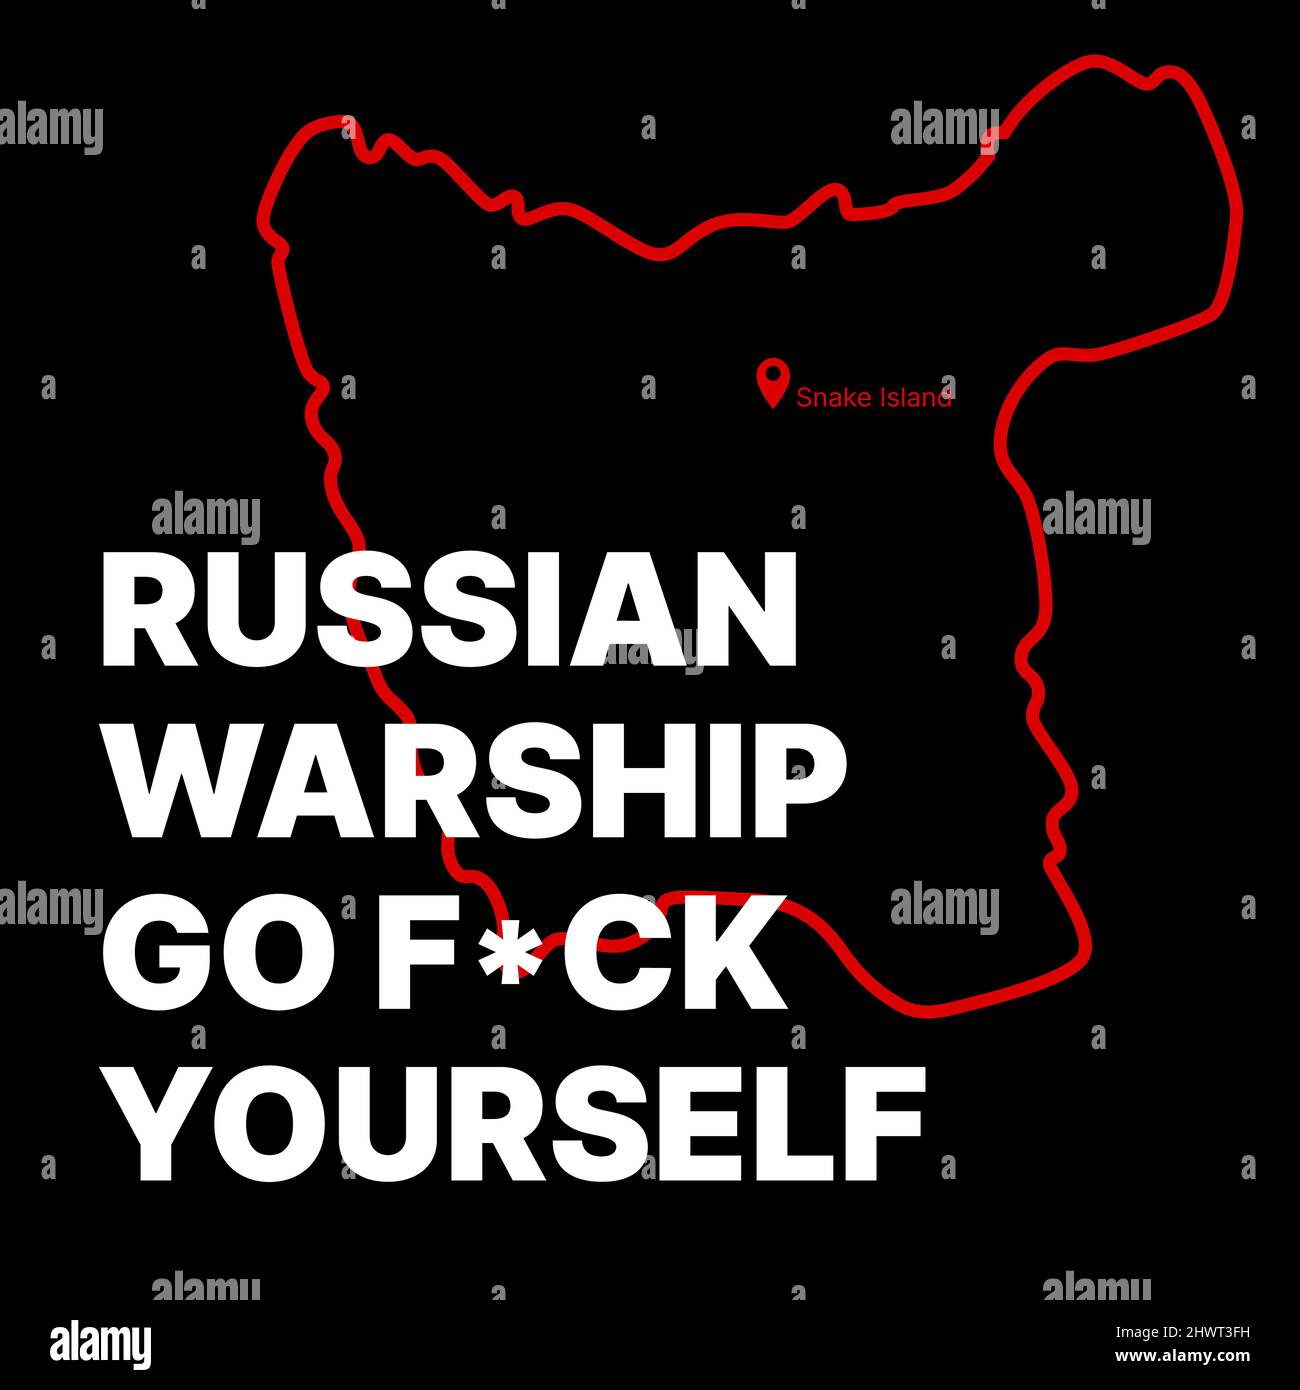 Snake Island Ukraine. Russian Warship Go Fck Yourself. Vector illustration Stock Vector